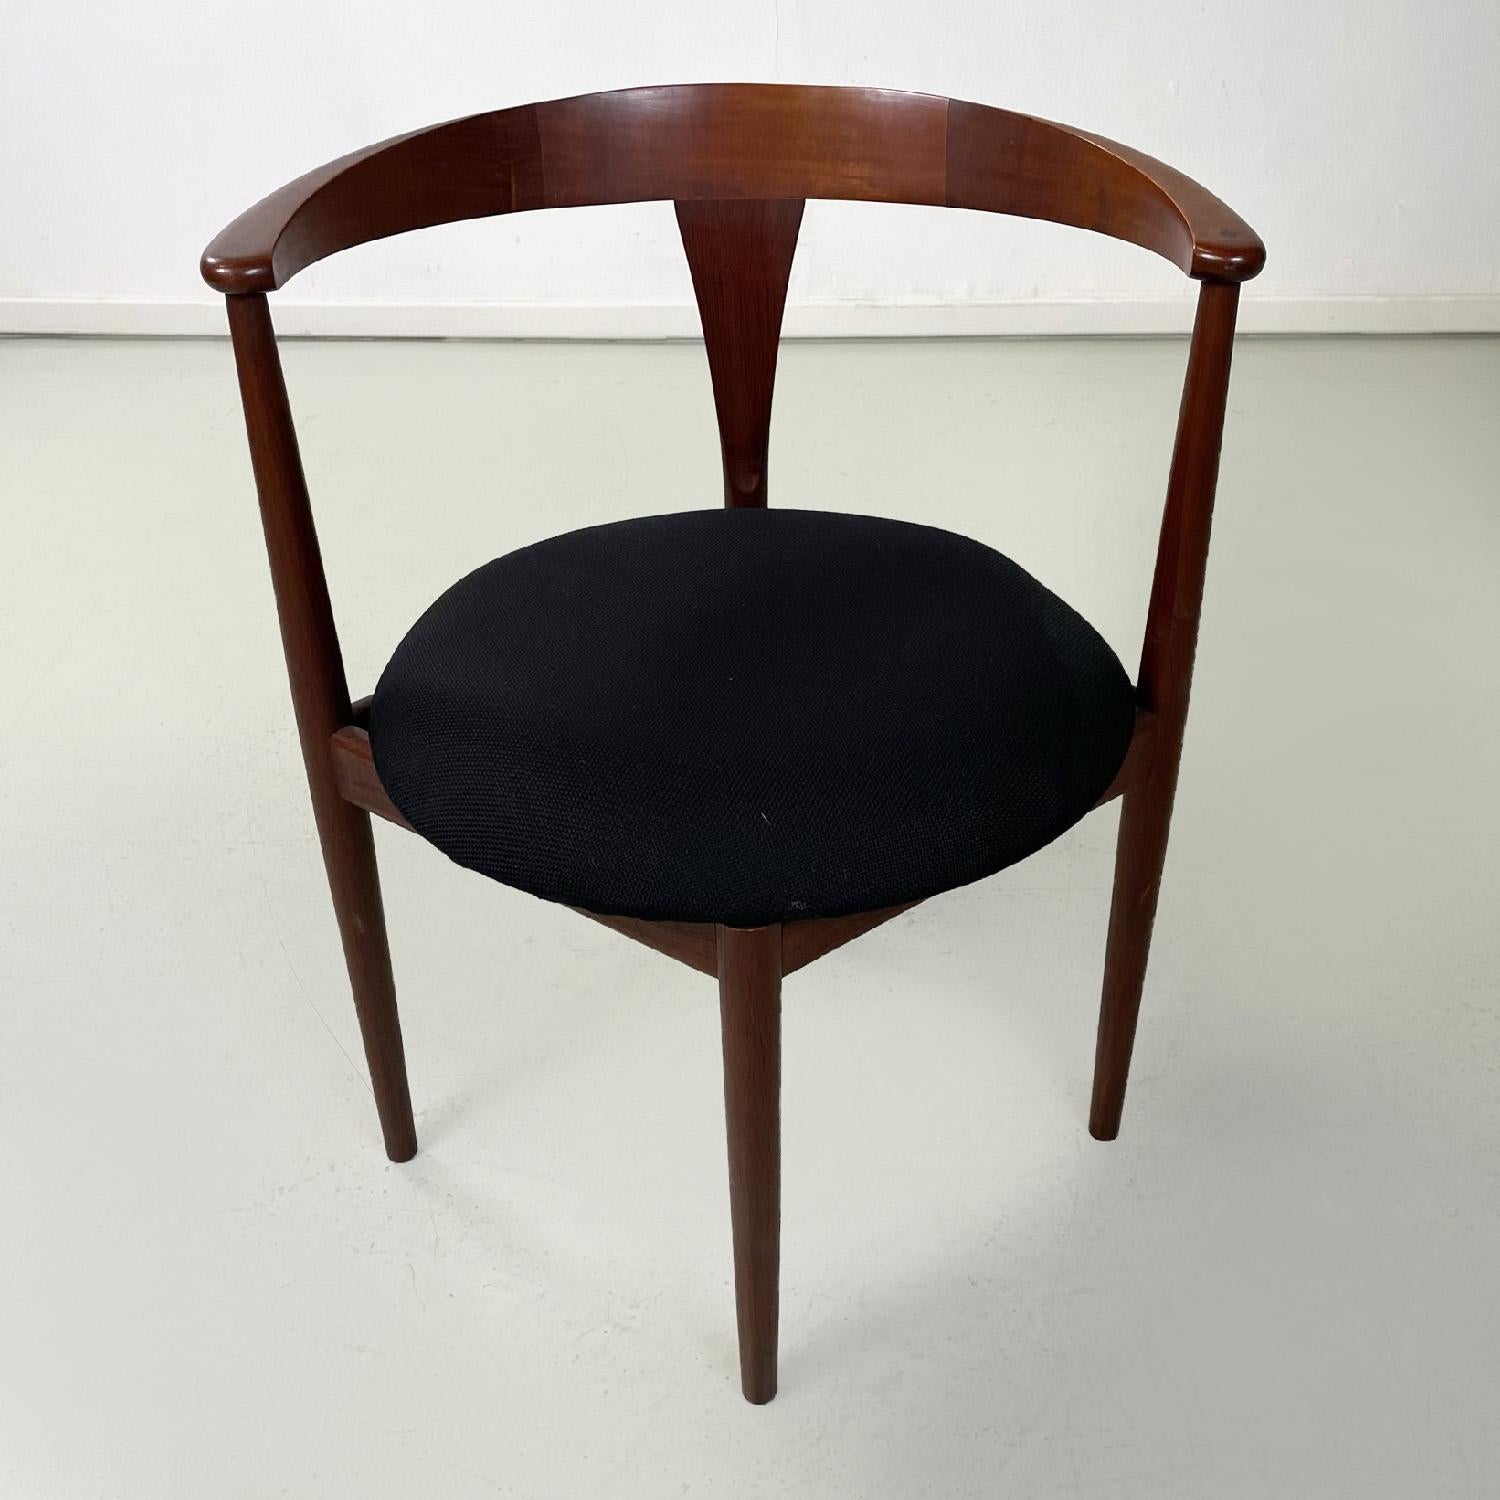 Fabric Solid teak wood chairs by Vilhelm Wohlert for Paul Jeppesen Mobelfabrik, 1960s